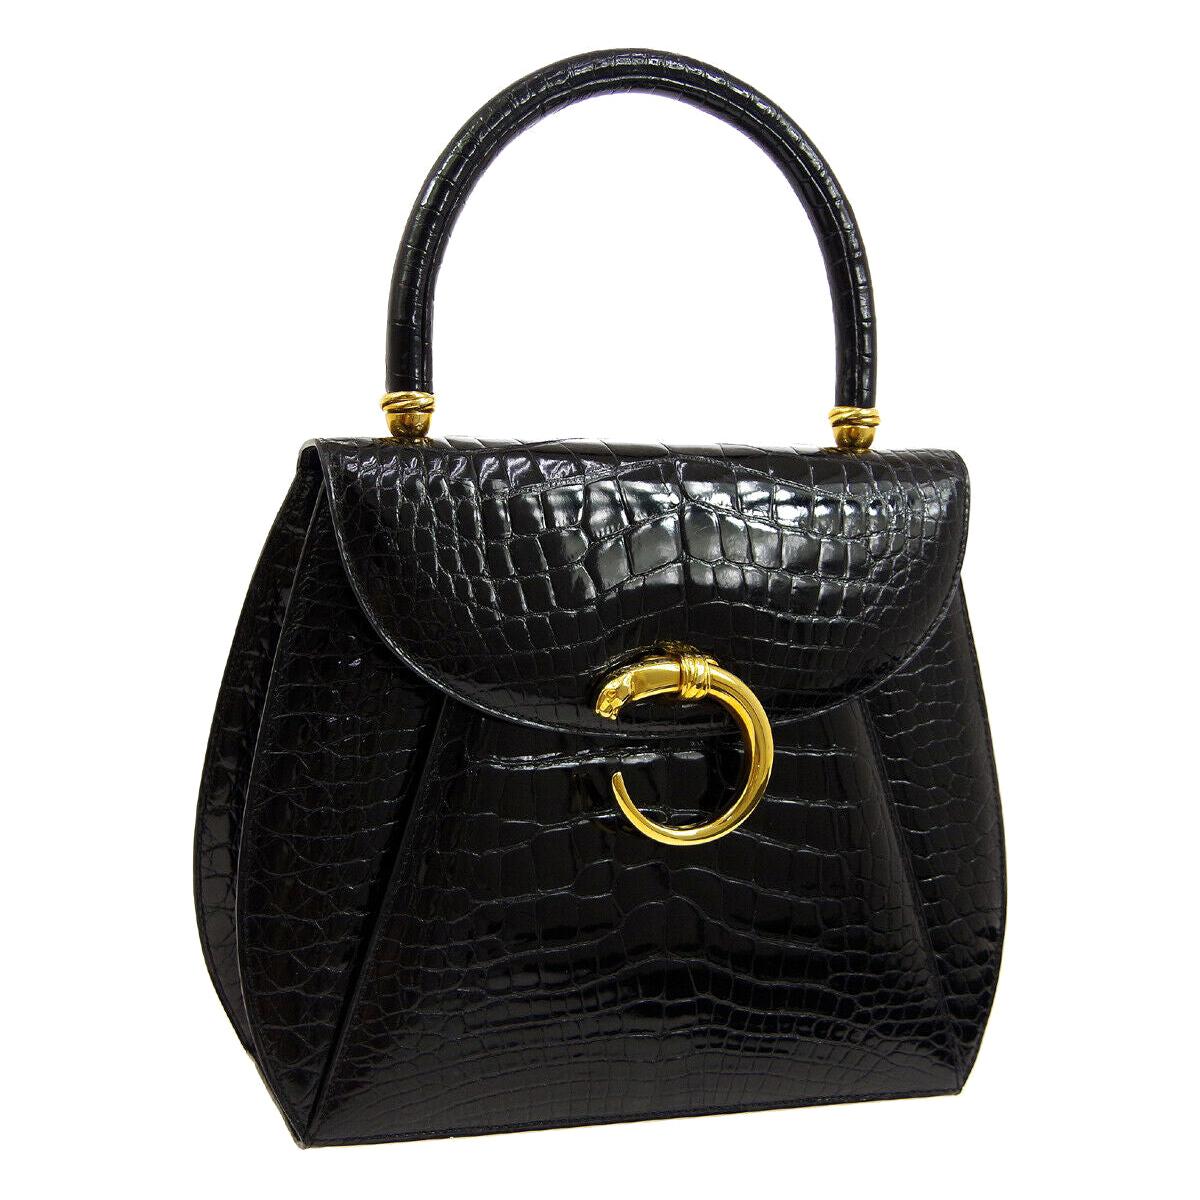 Cartier Black Crocodile Exotic Leather Gold Emblem Kelly Top Handle Satchel Bag